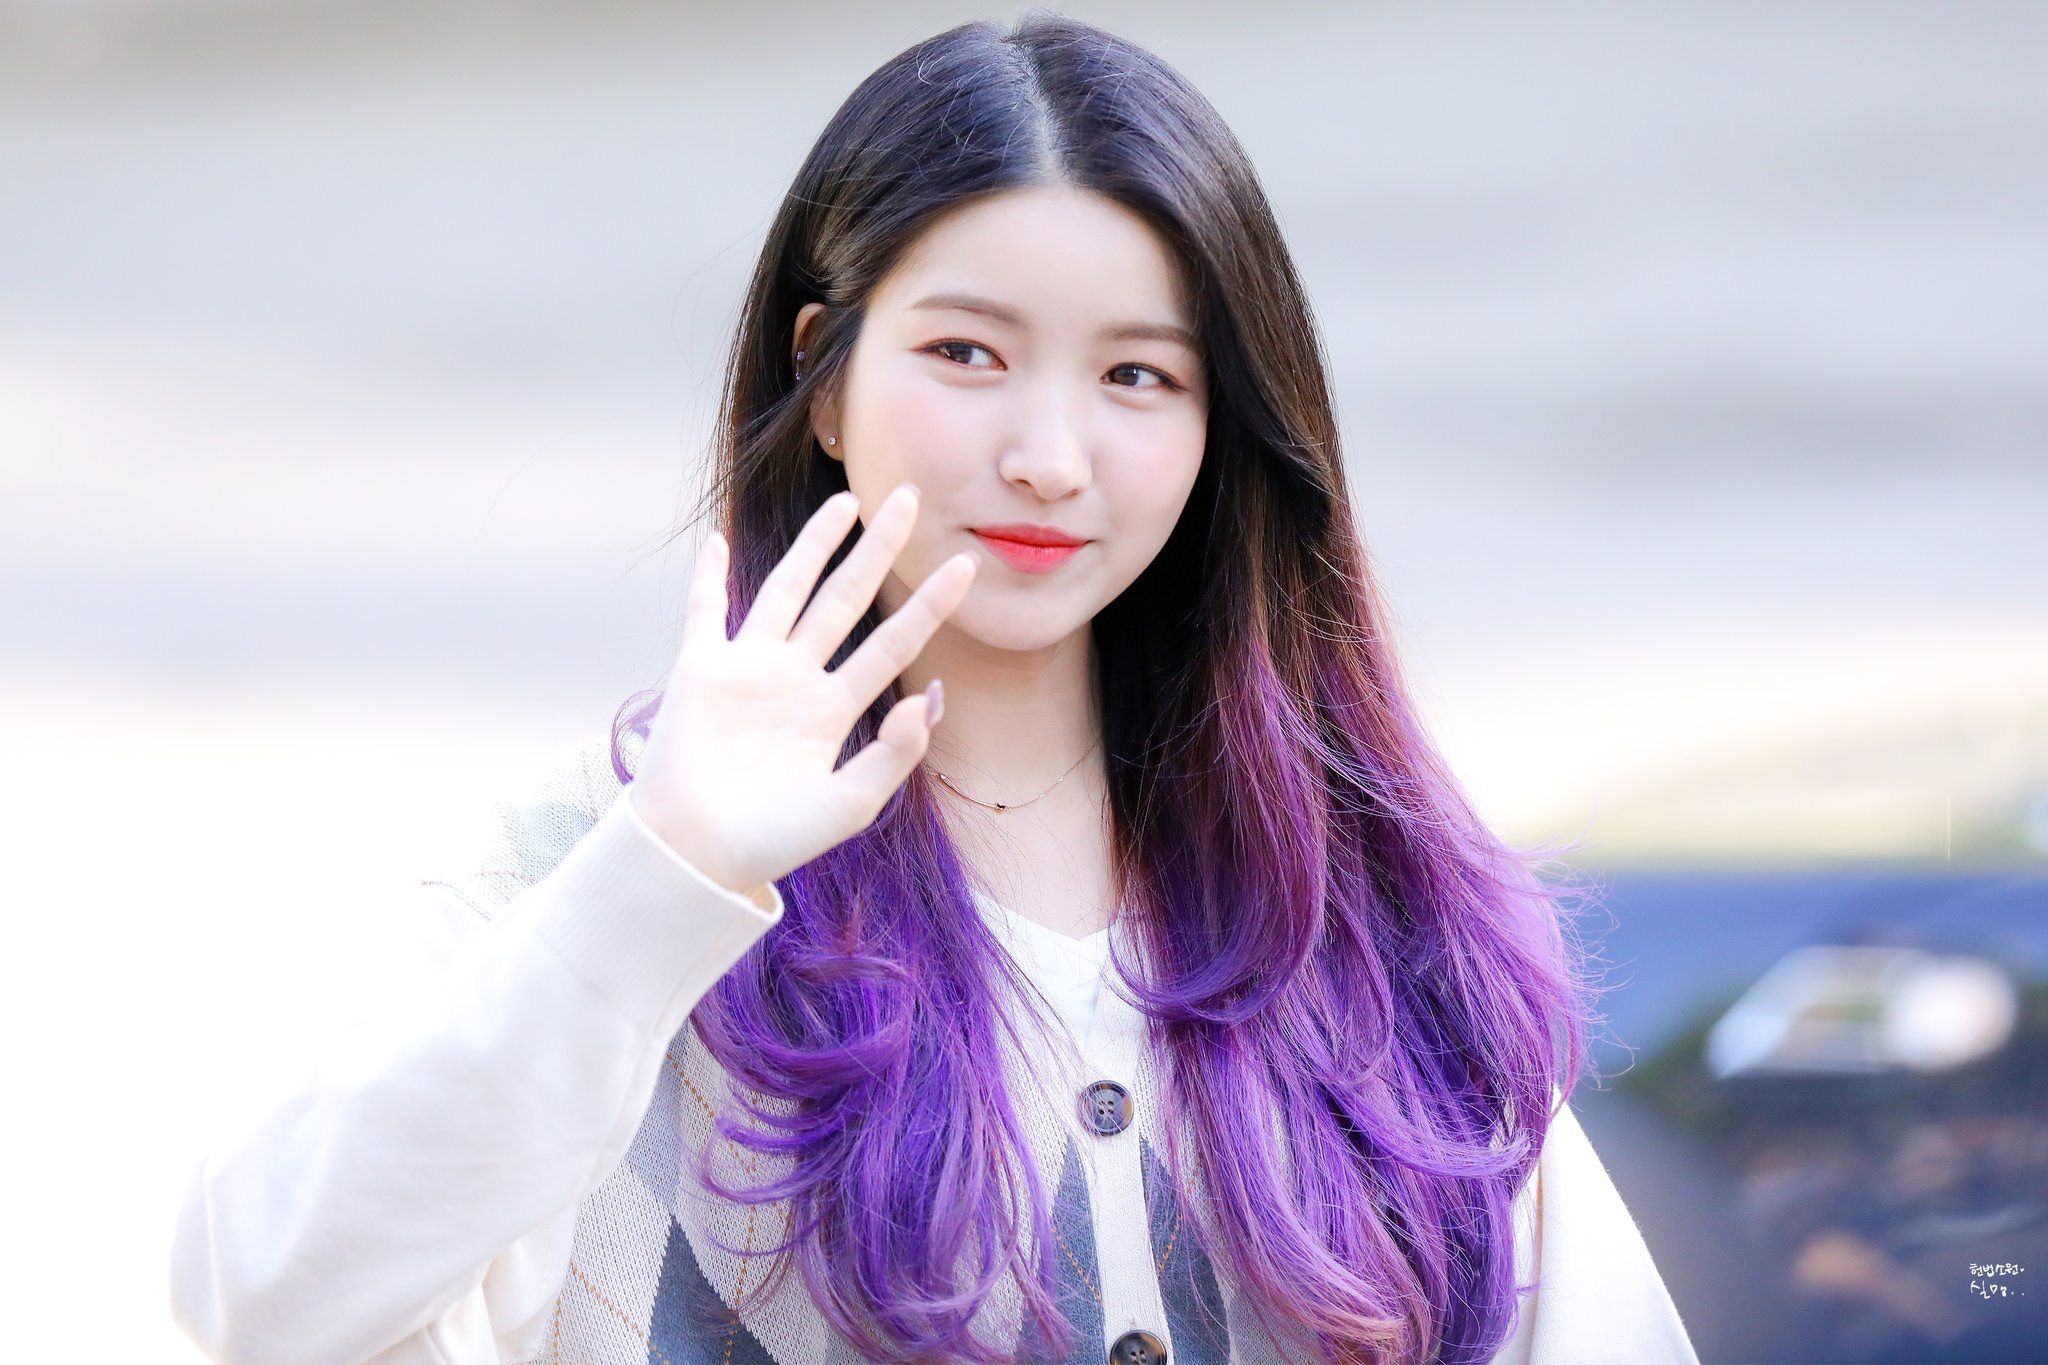 Kim end. GFRIEND Sowon. Совон айдол. Кореянки с фиолетовыми волосами. Кореец с фиолетовыми волосами.